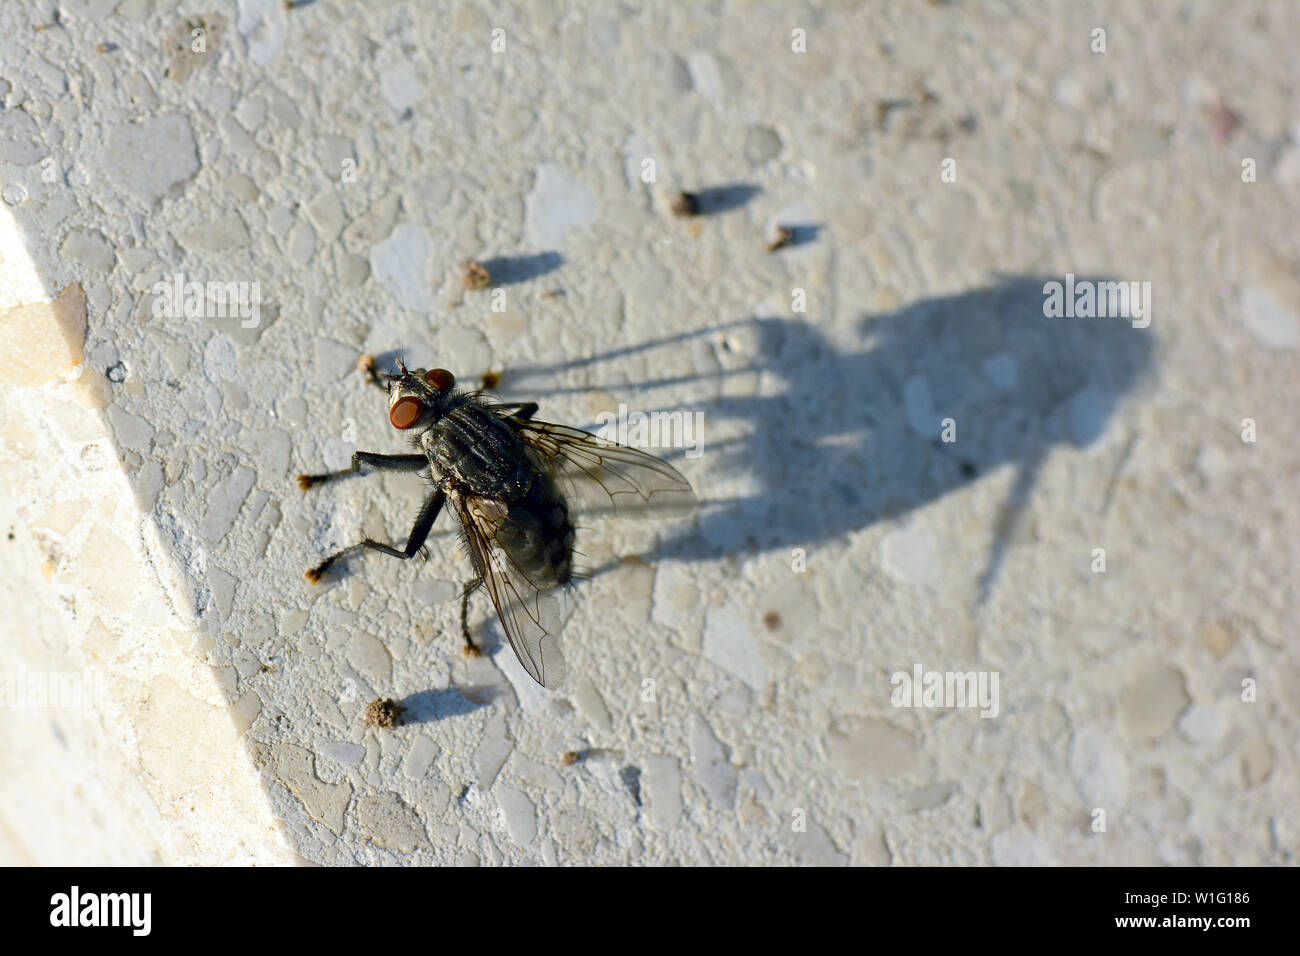 common flesh fly, Graue Fleischfliege, mouche grise de la viande, Sarcophaga carnaria, közönséges húslégy, Budapest, Hungary, Magyarország, Europe Stock Photo